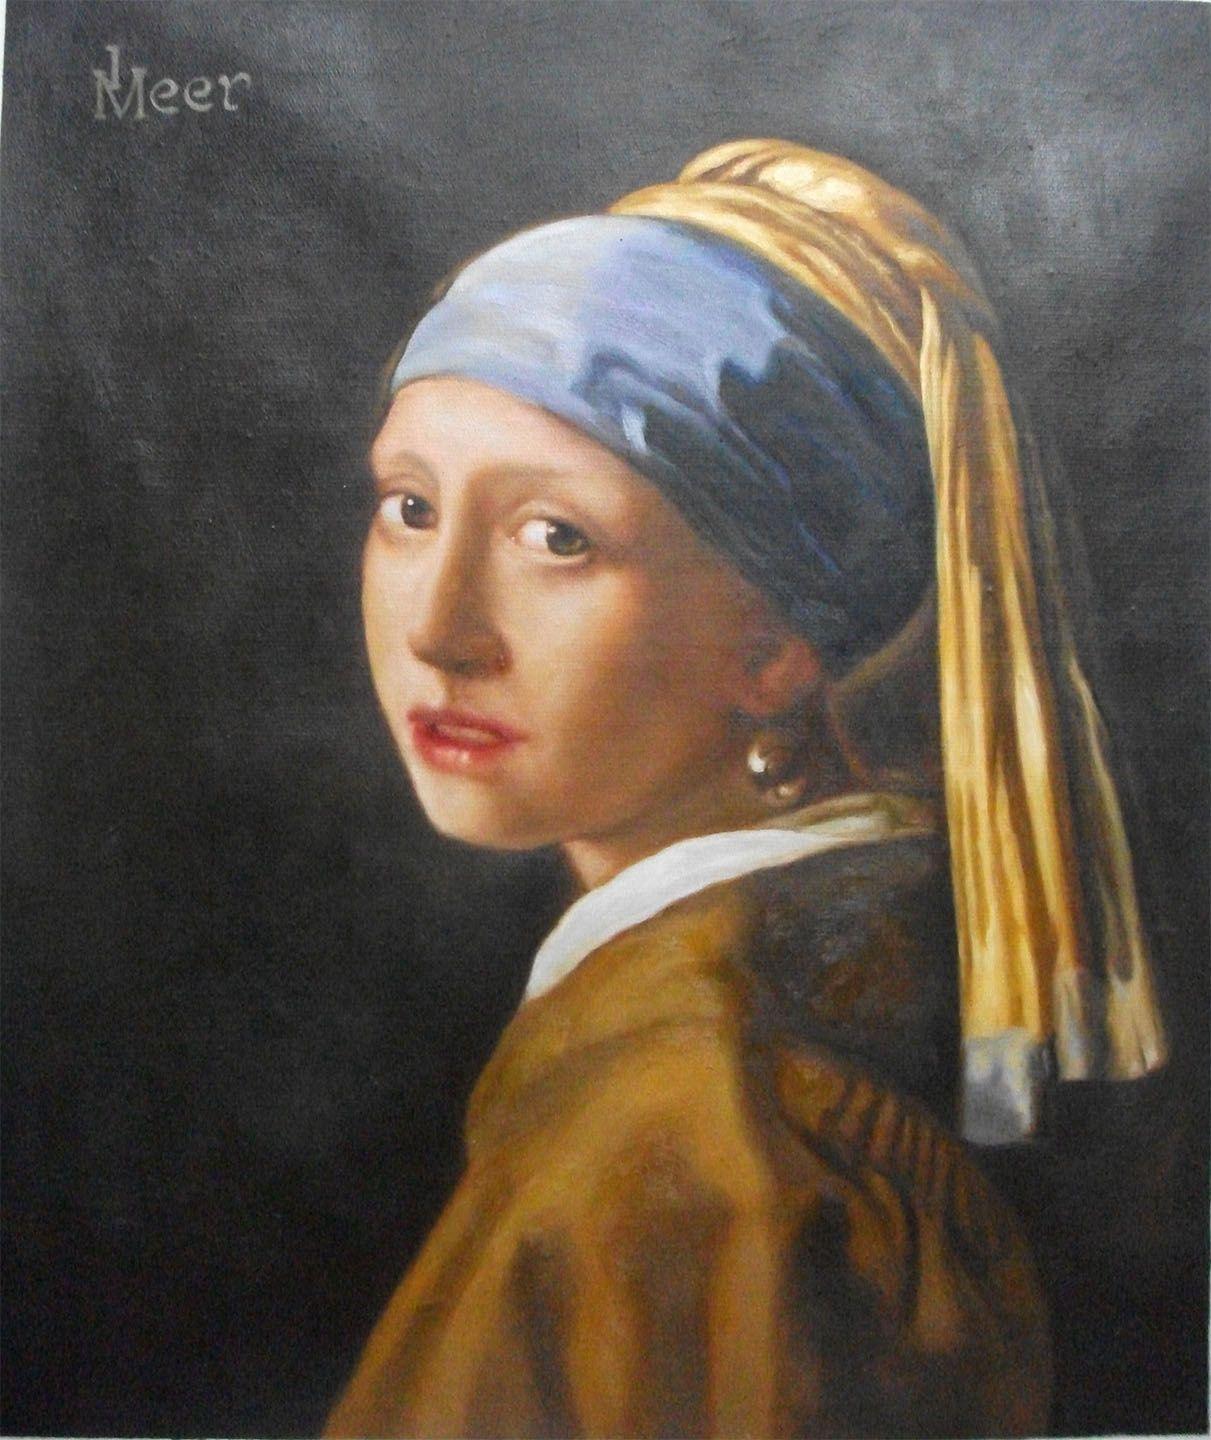 Johannes, Jan or Johan Vermeer. The Milkmaid was born